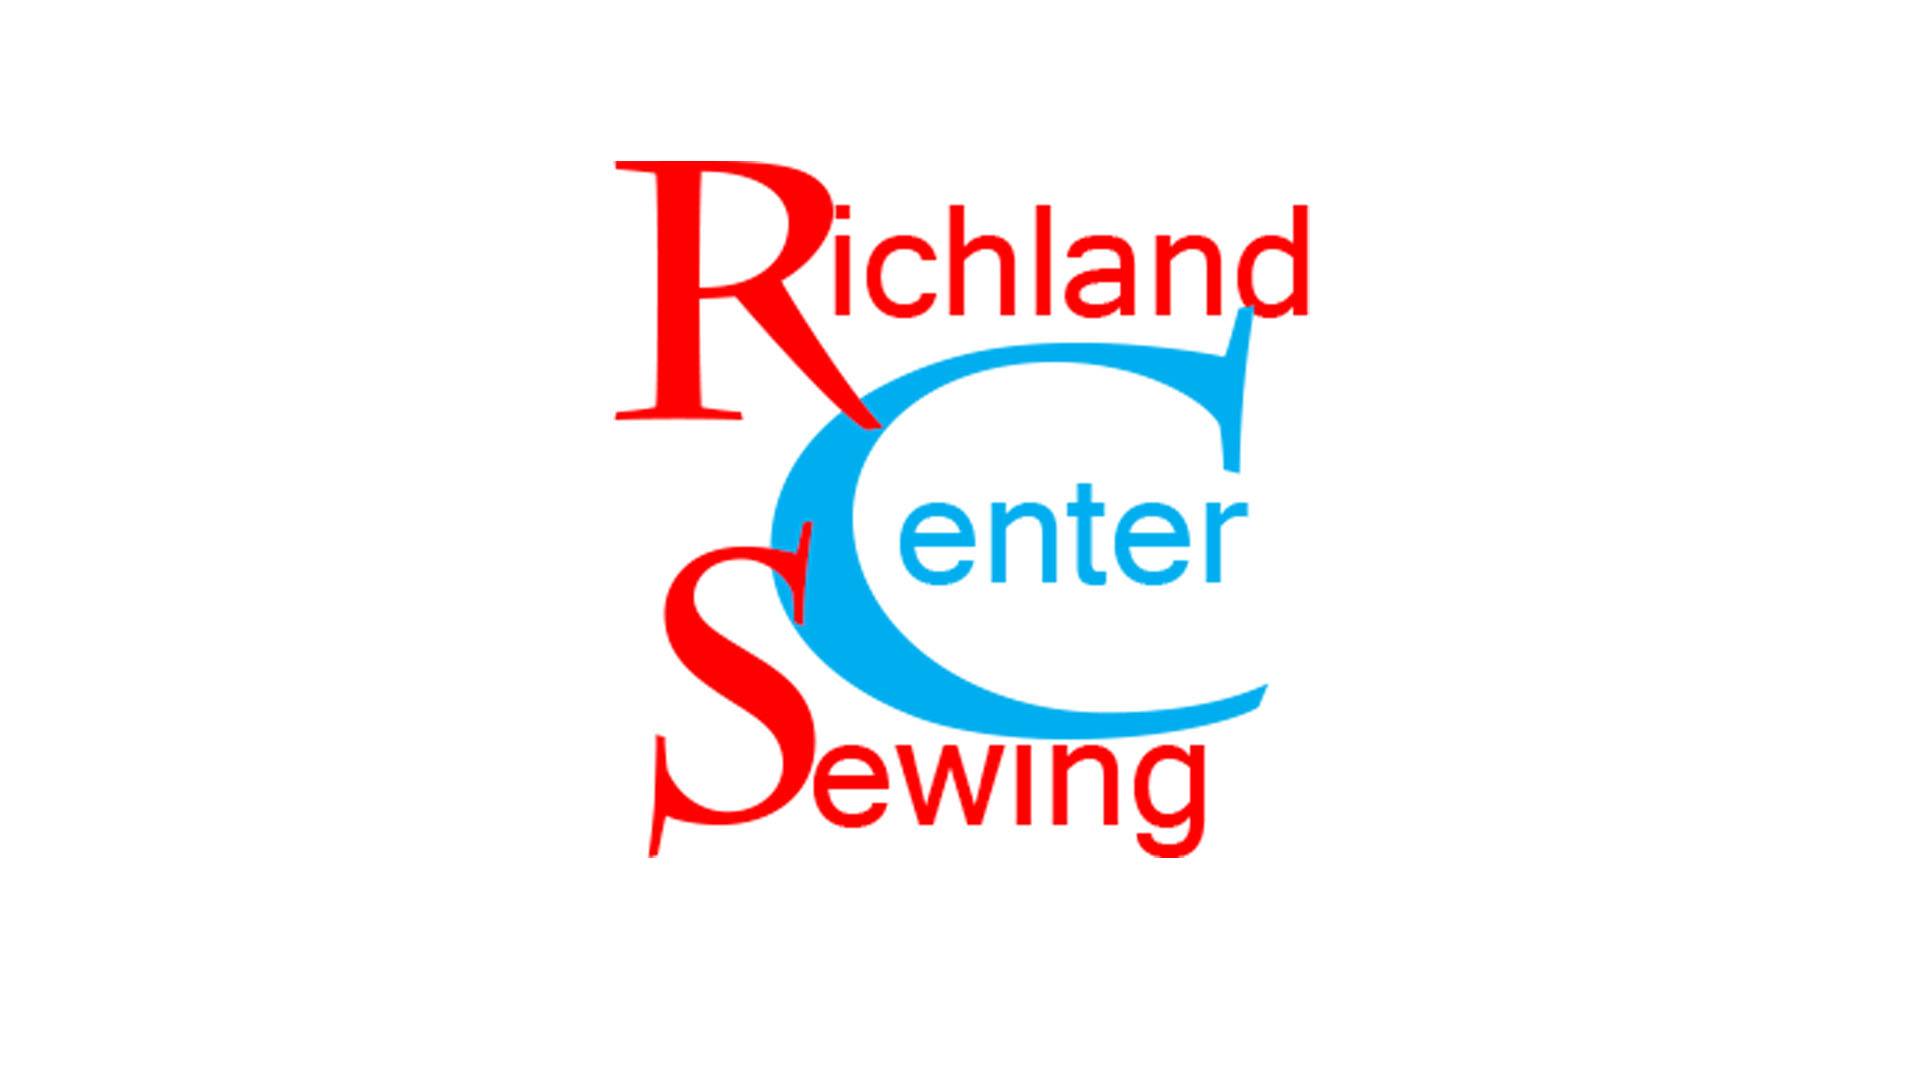 Richland Sewing Center Logo